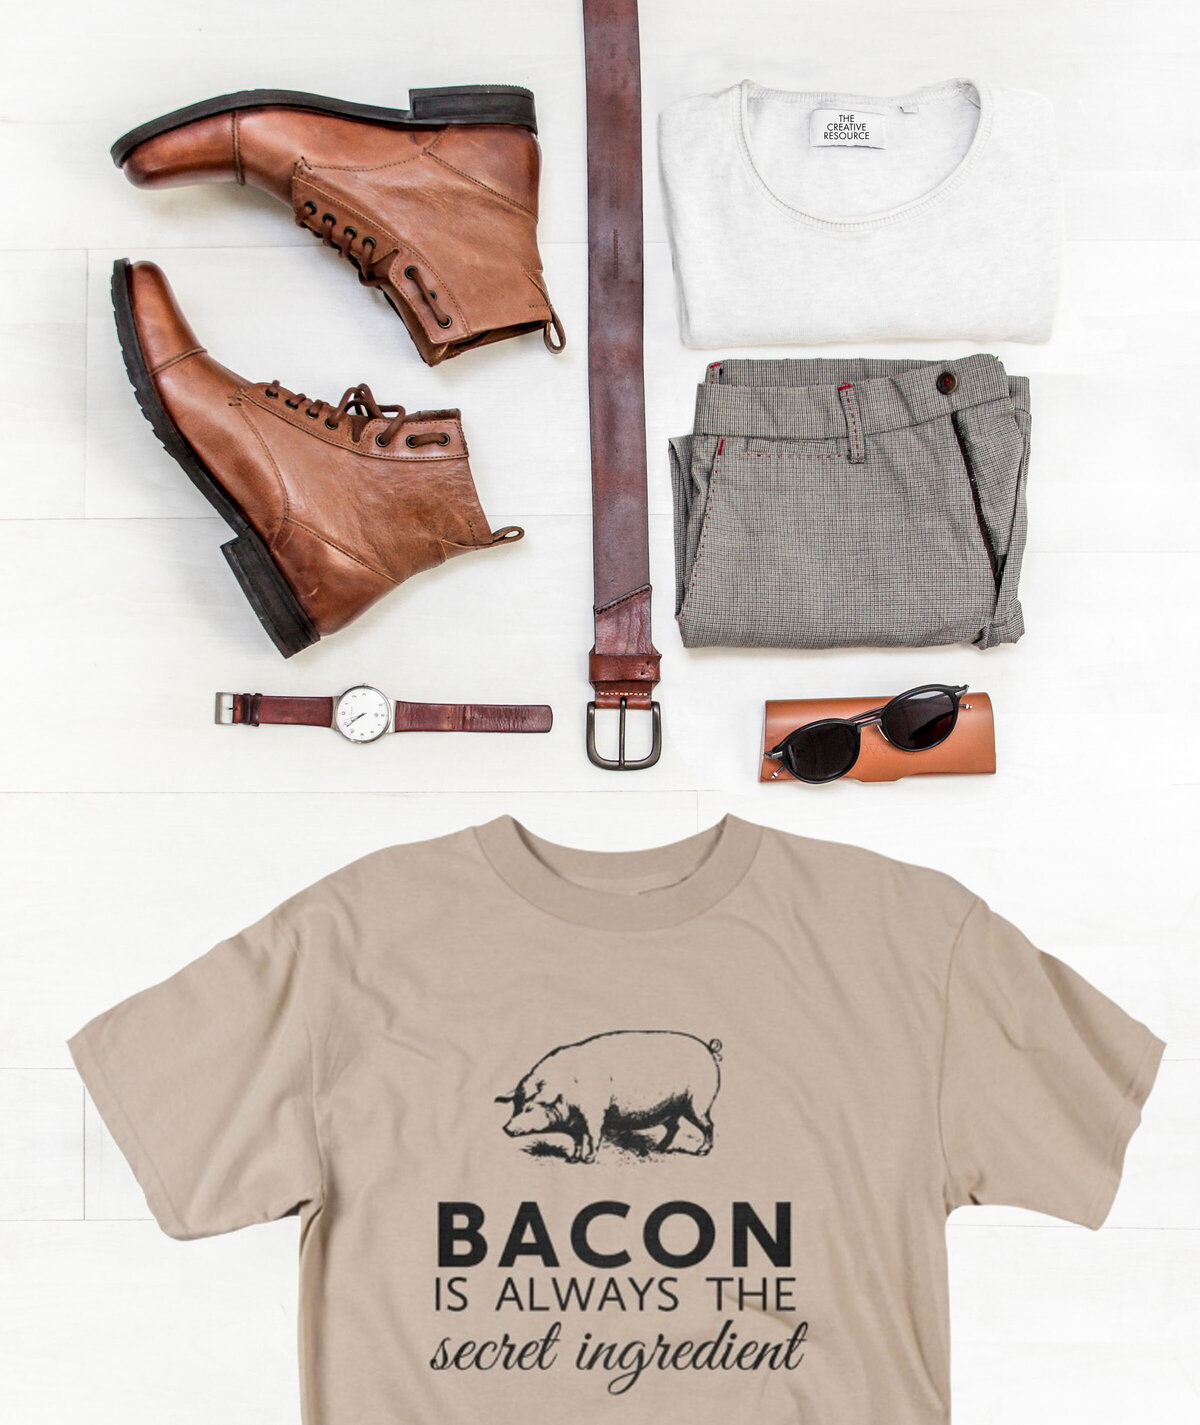 Bacon is always the secret ingredient shirt design by Nancy Ingerosll